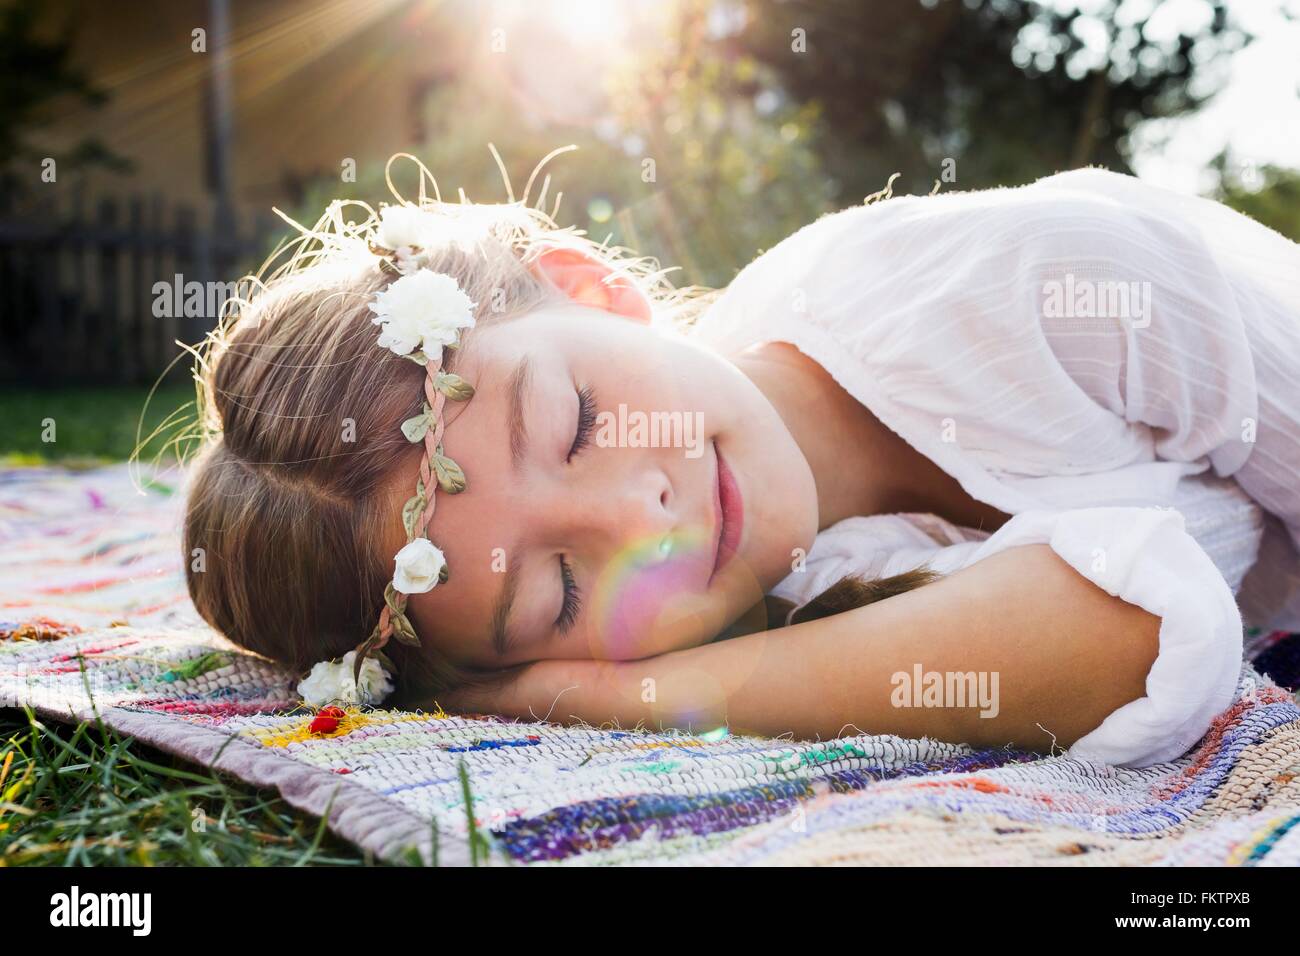 Girl with flowers round head sleeping Stock Photo